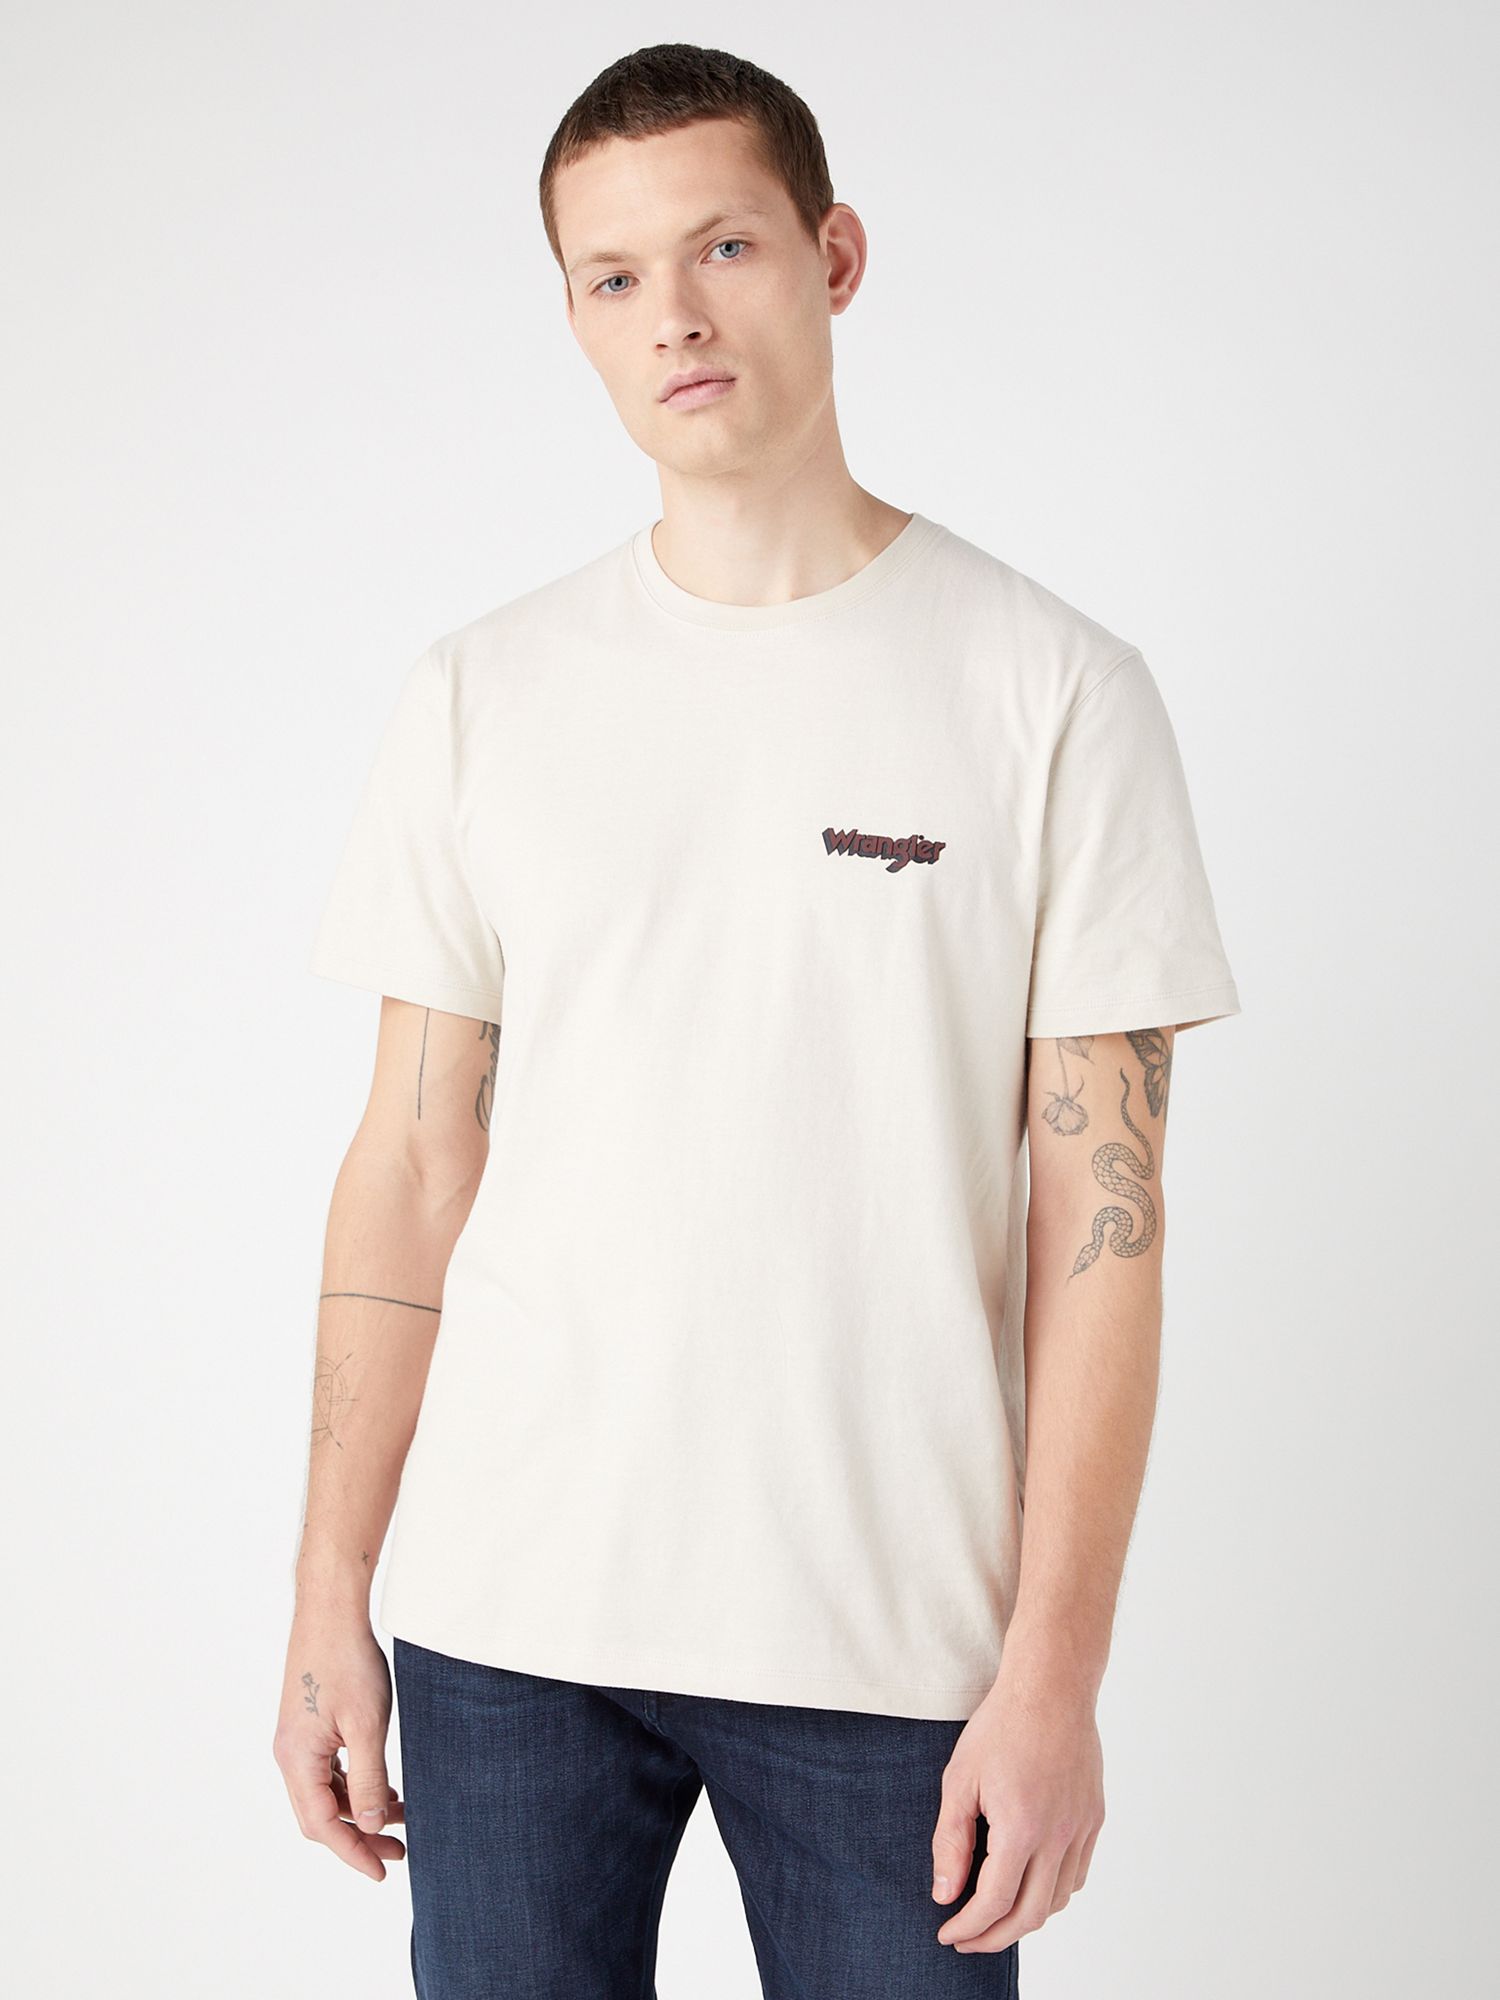 Wrangler Short Sleeve Logo T-Shirt, Rainy Day, M